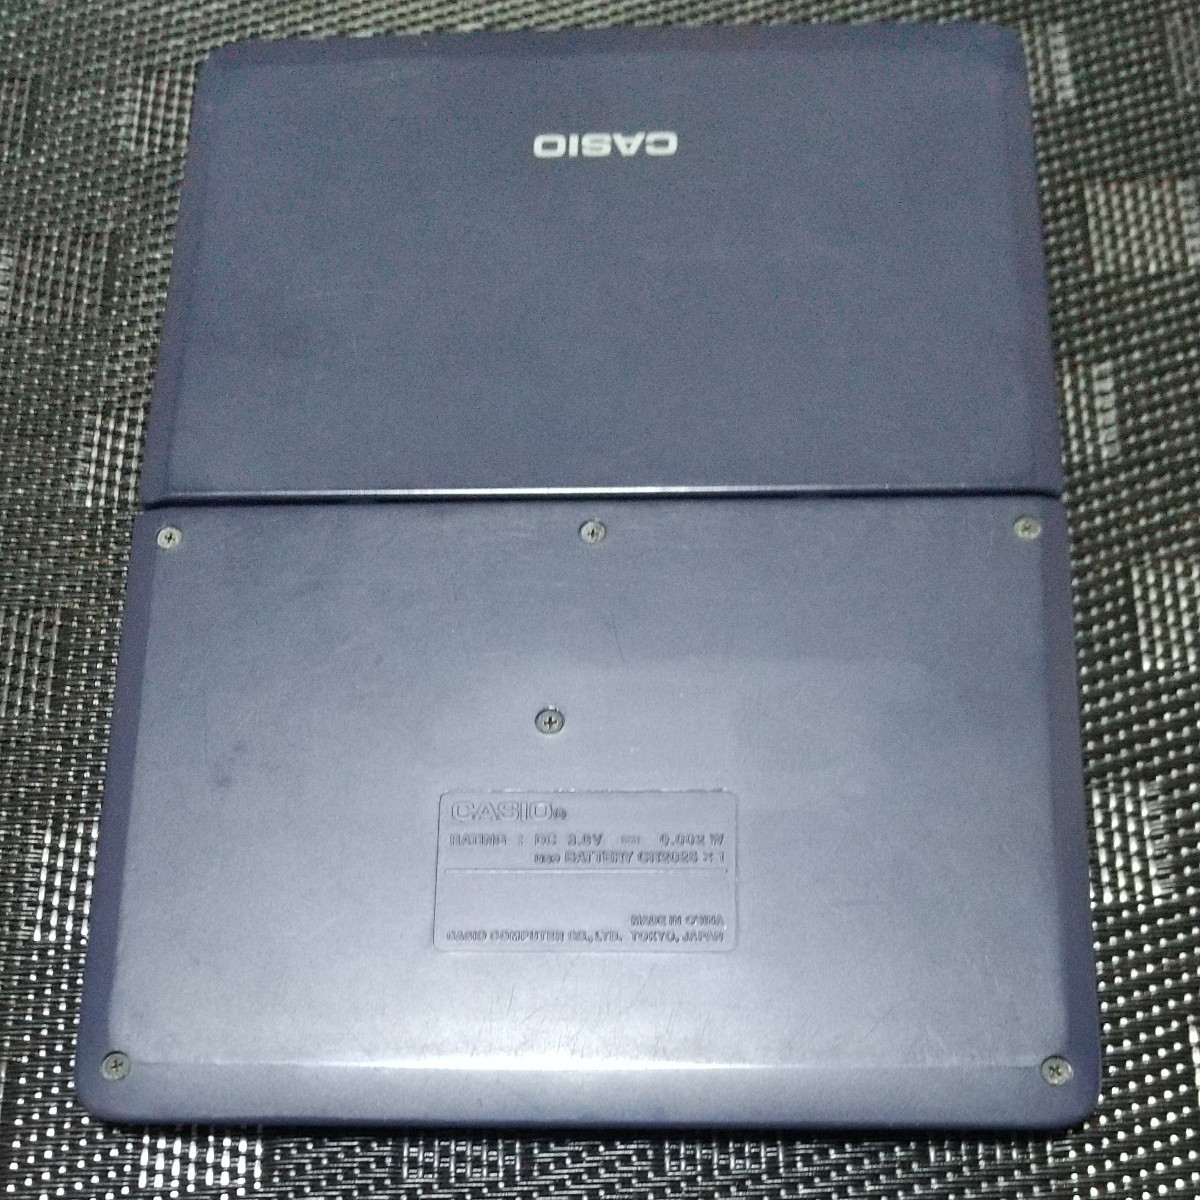 CASIO 計算機 ローン電卓 BF-480 説明書付き